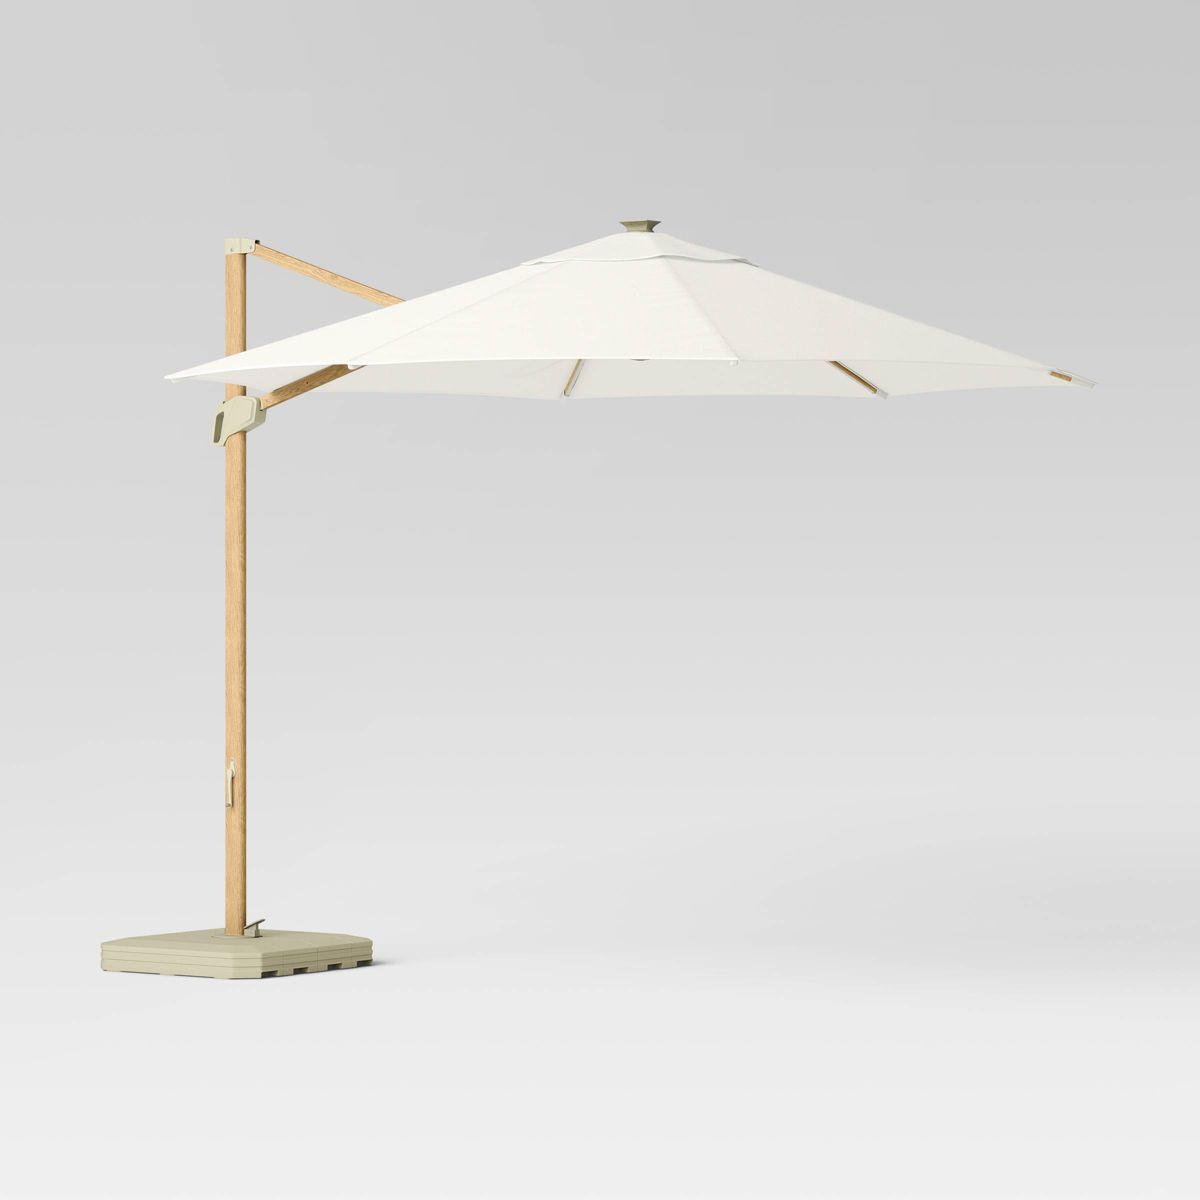 11' Round Offset Solar Outdoor Patio Market Umbrella with Light Wood Pole - Threshold™ | Target